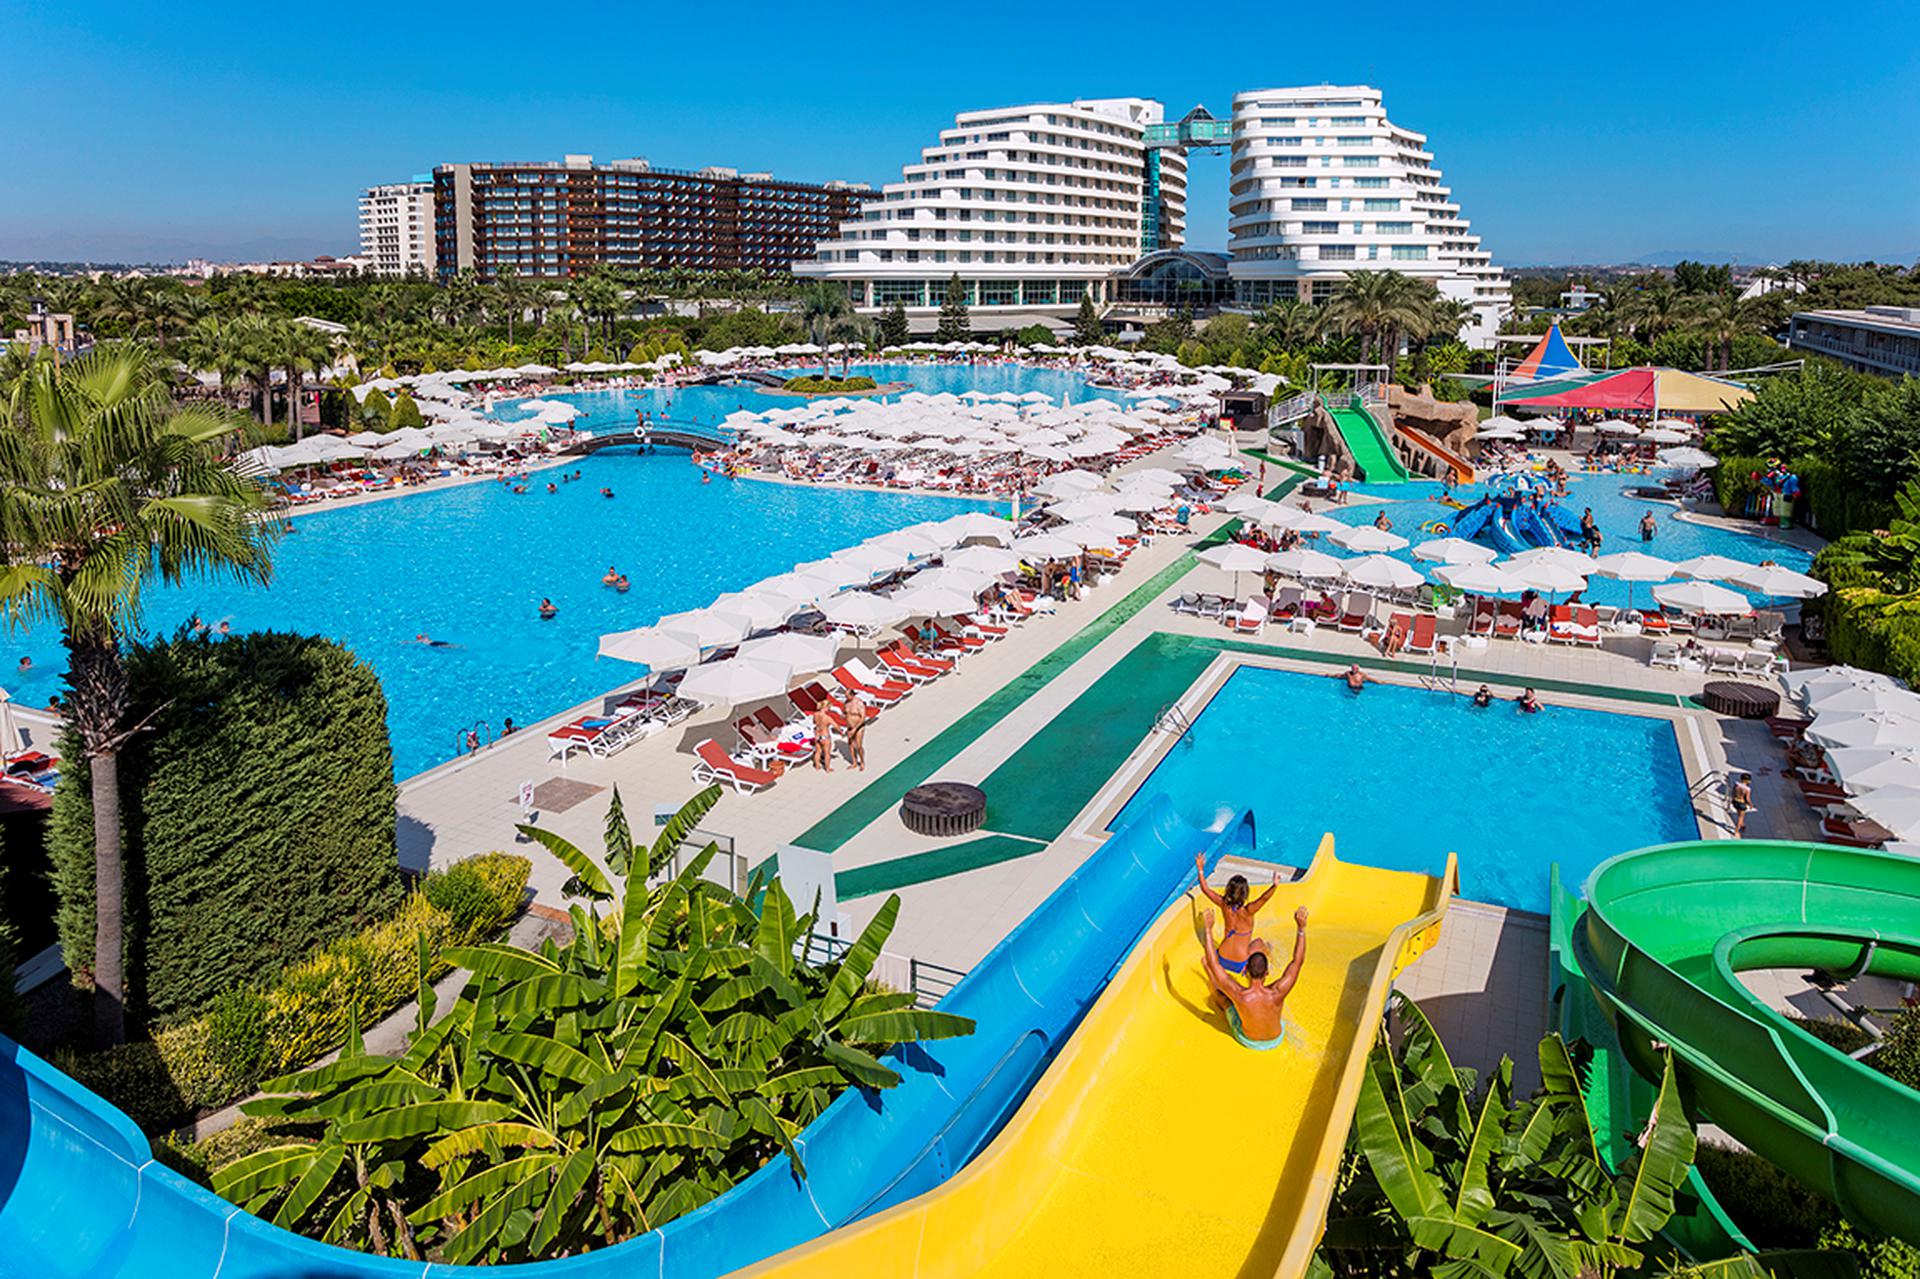 Miracle Resort Hotel Antalya